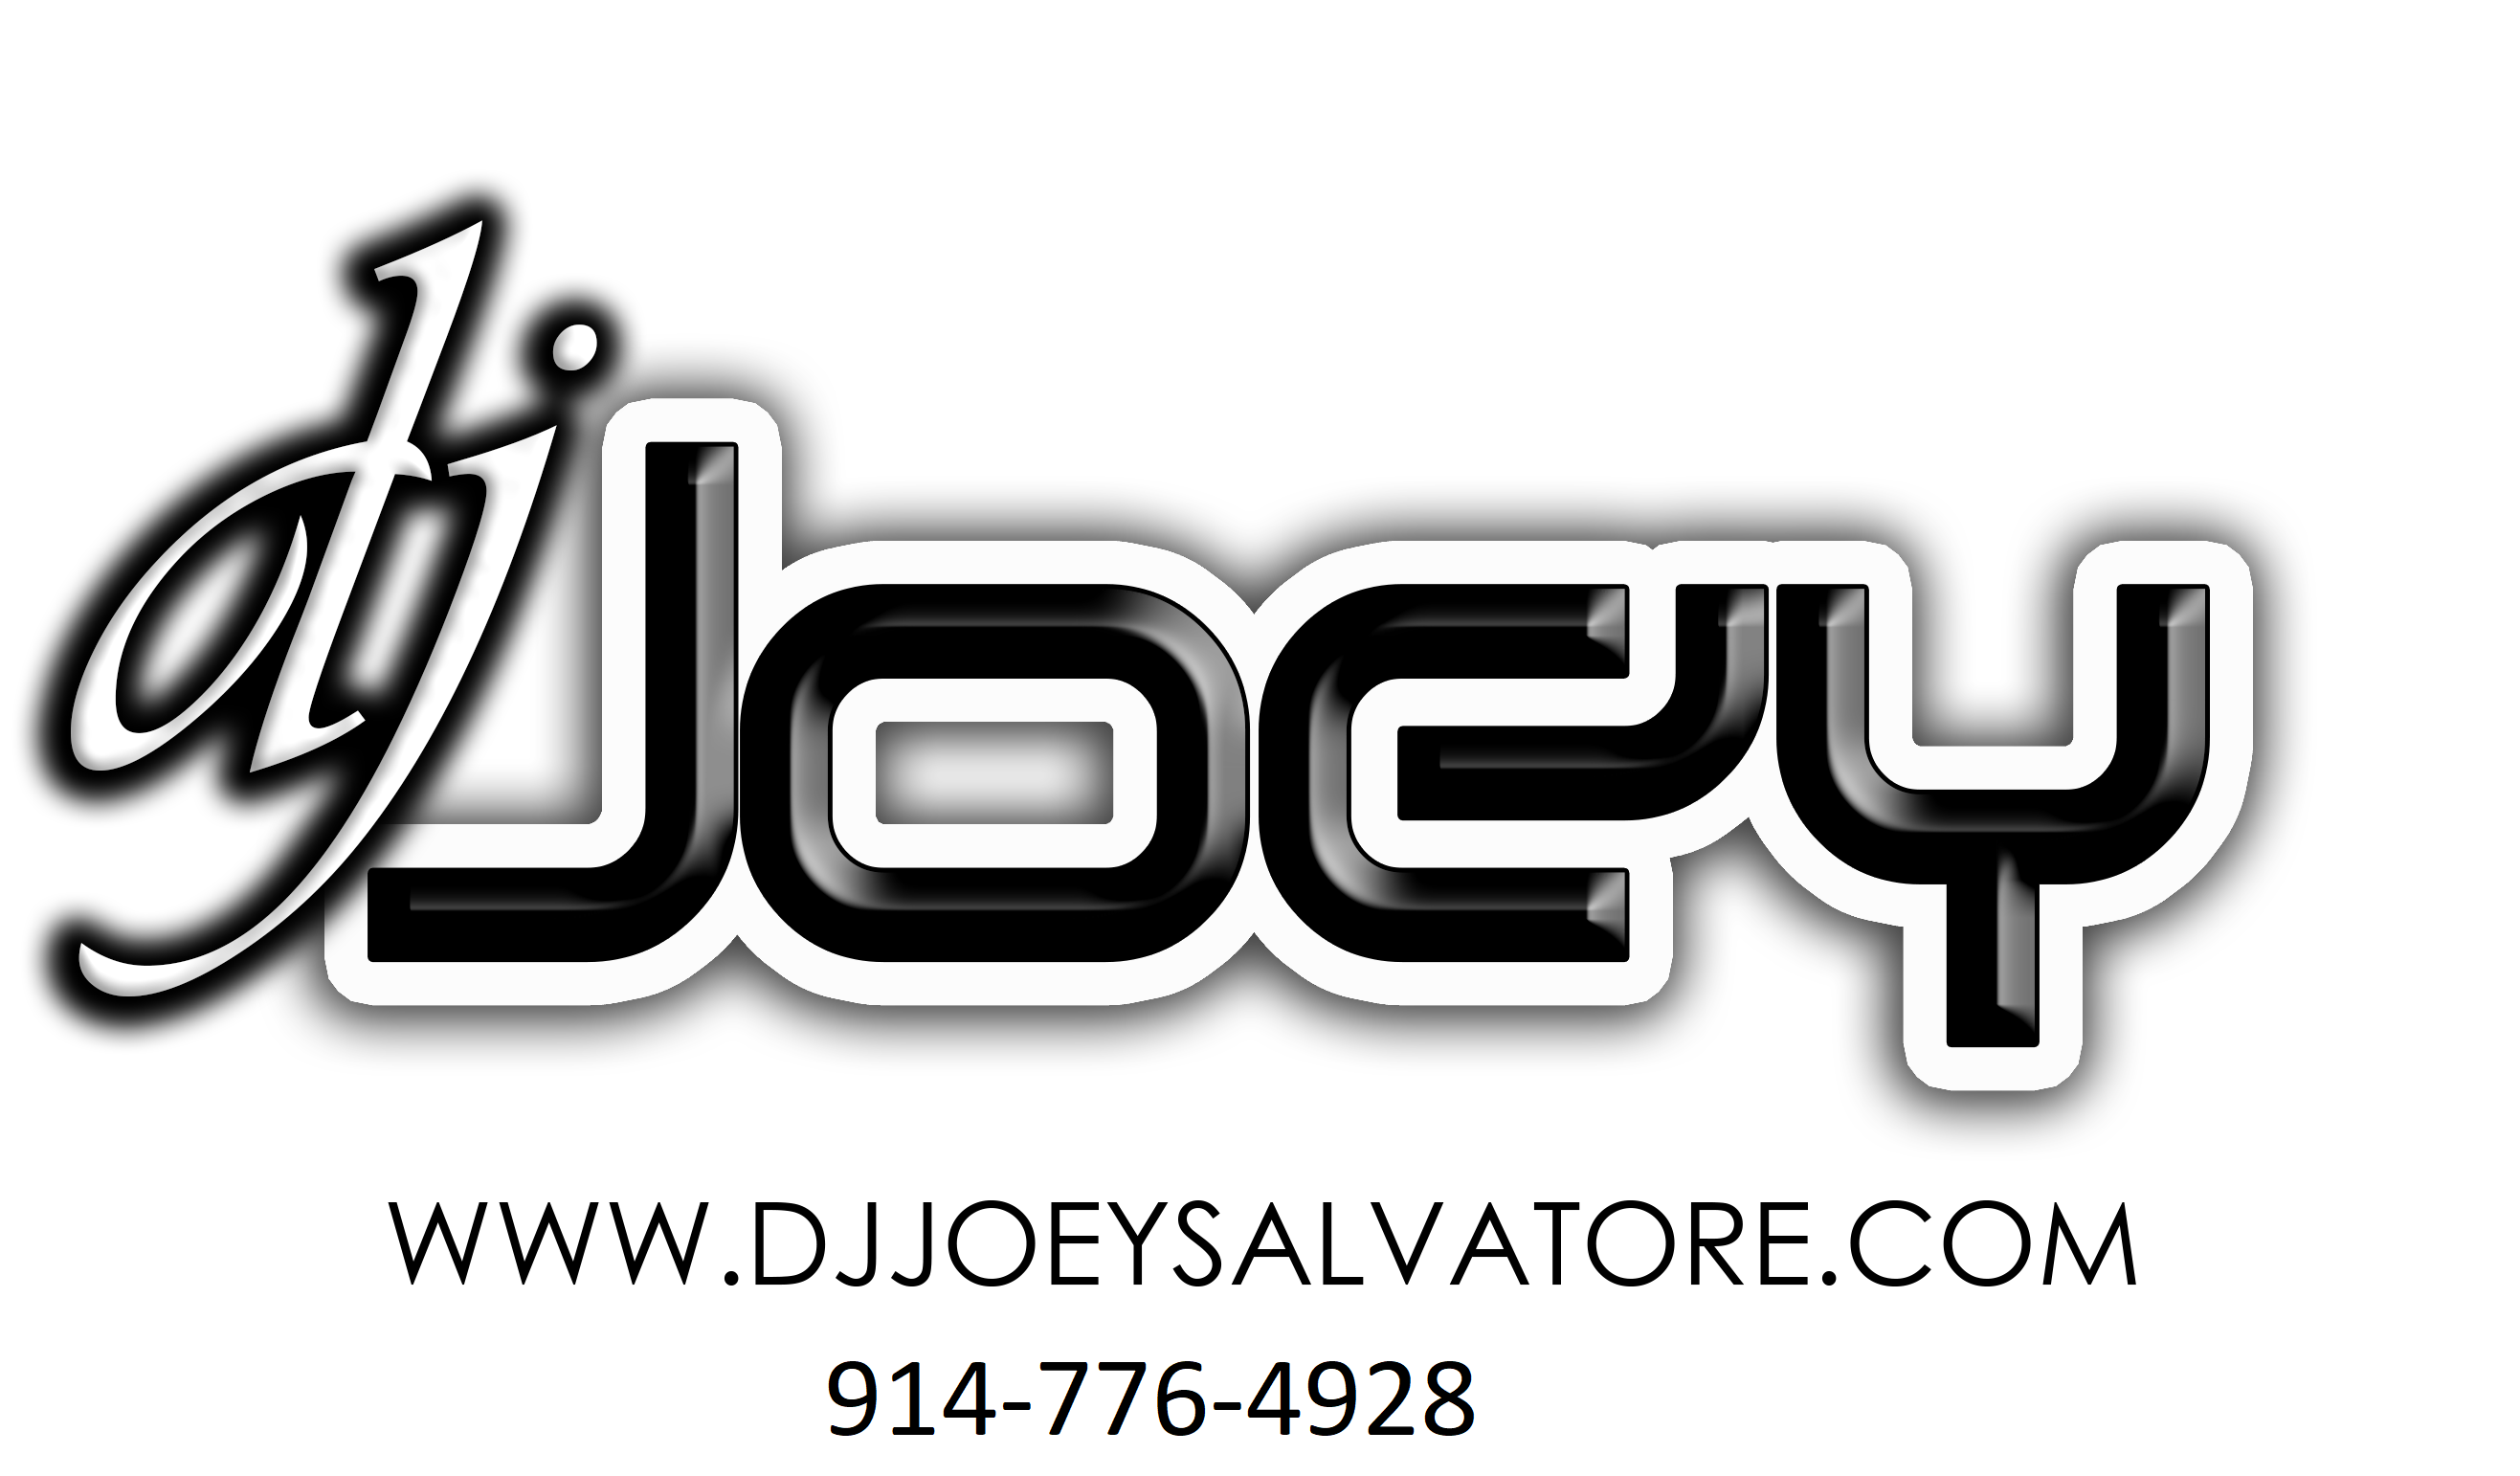 DJ Joey